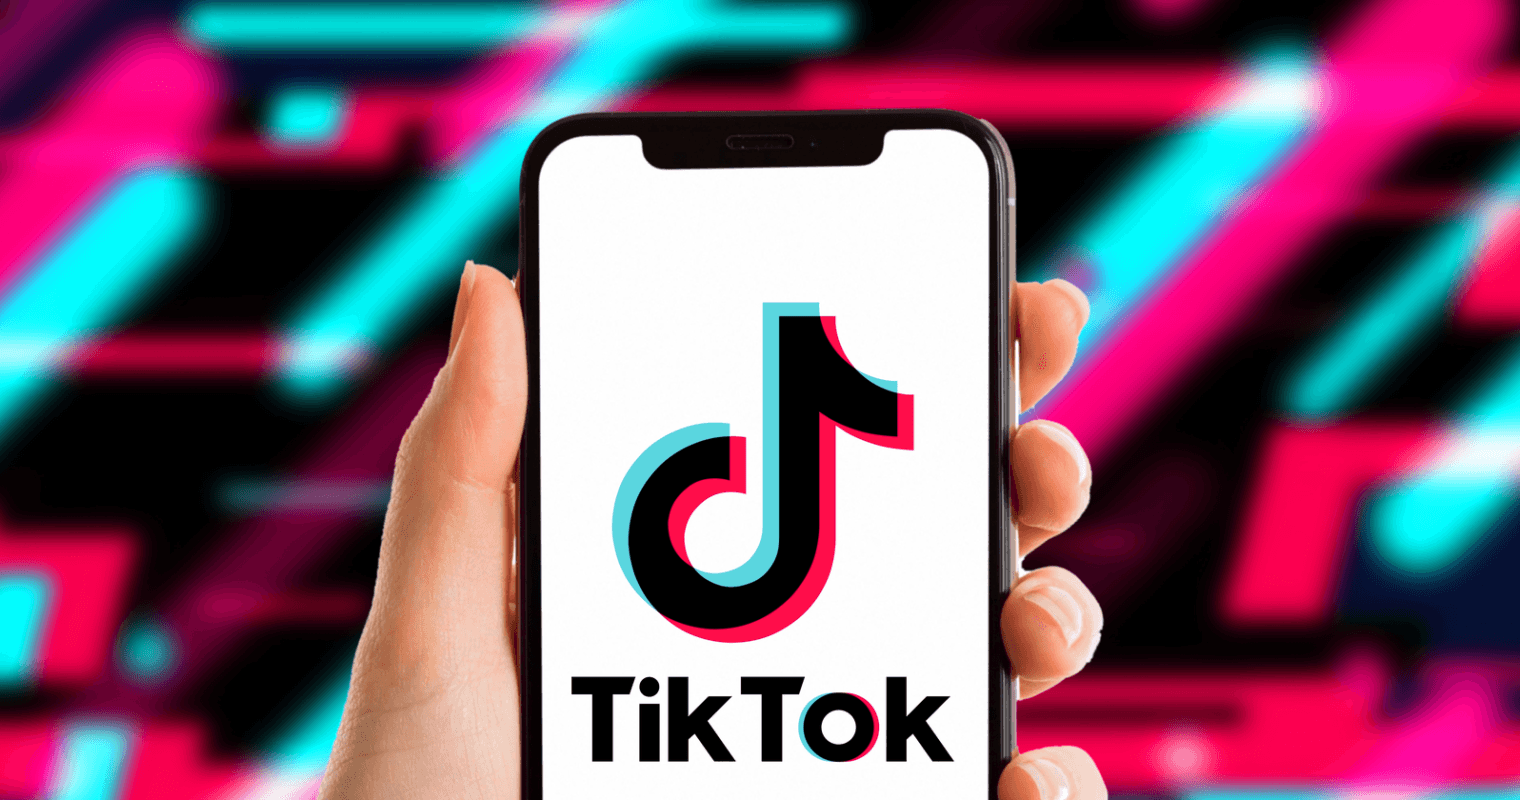 How to Speed Up TikTok Videos